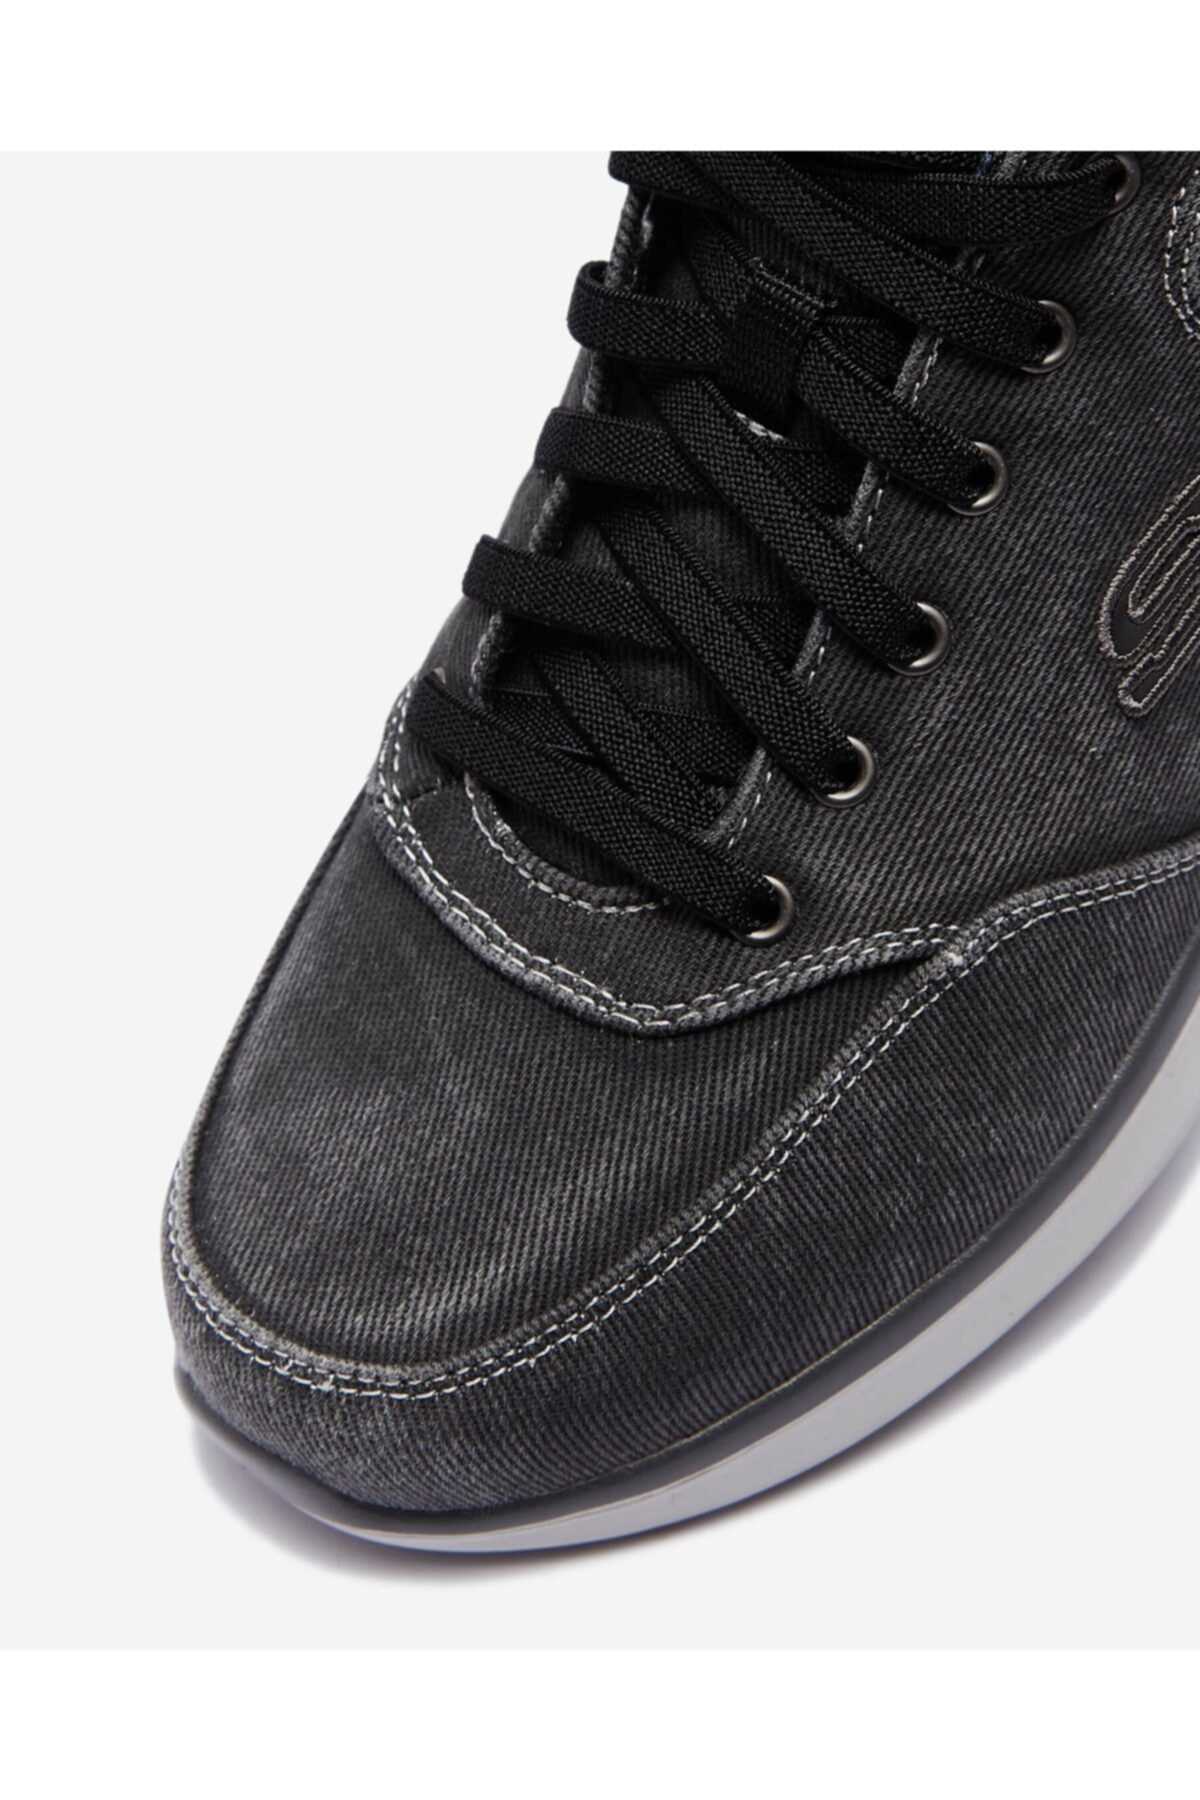 فروش کفش اسپرت مردانه برند اسکیچرز رنگ مشکی کد ty96131852